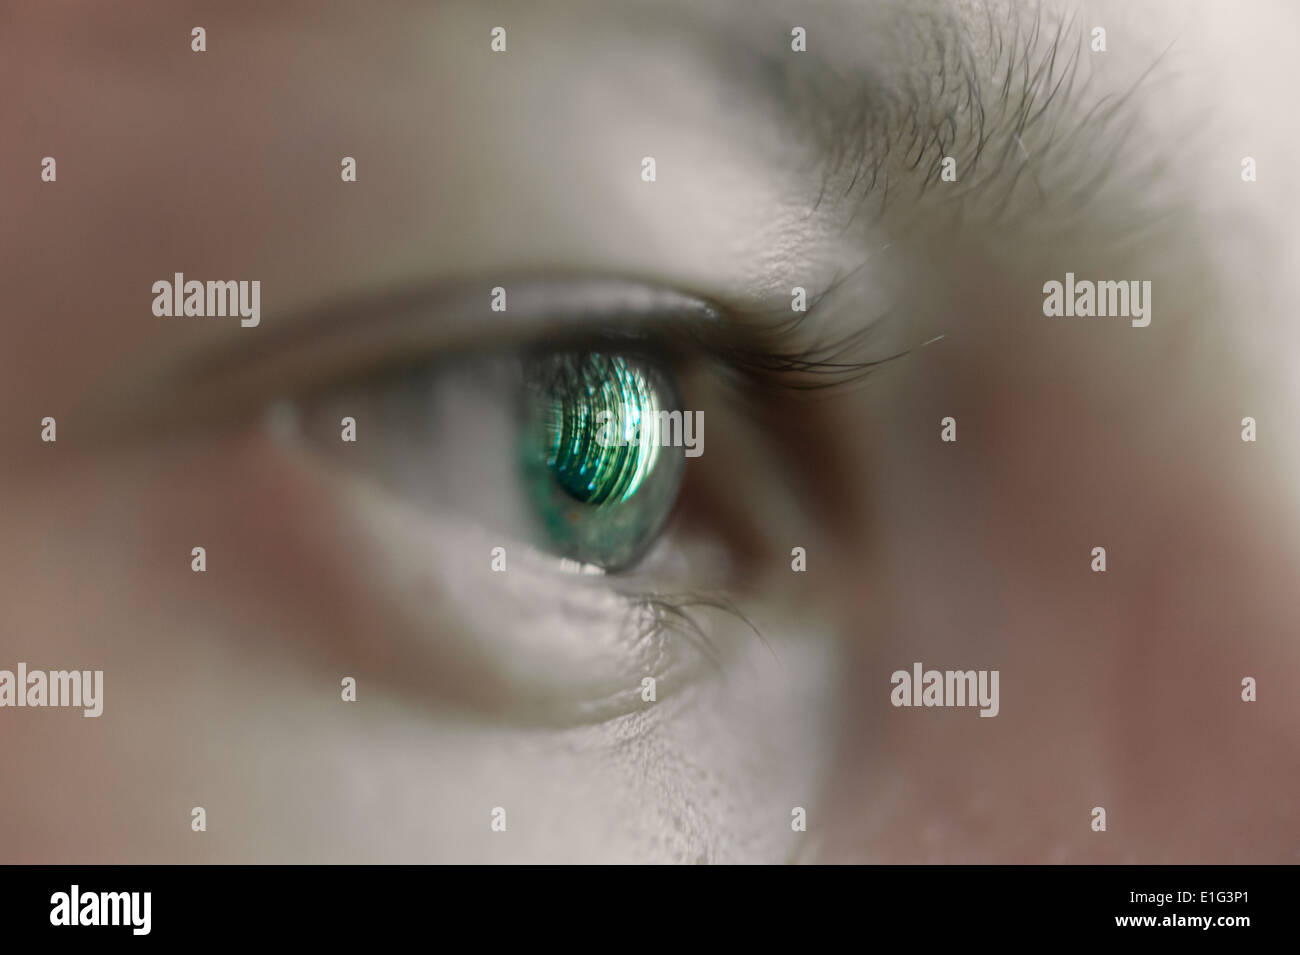 Reflet de l'écran d'un ordinateur dans un œil humain Banque D'Images